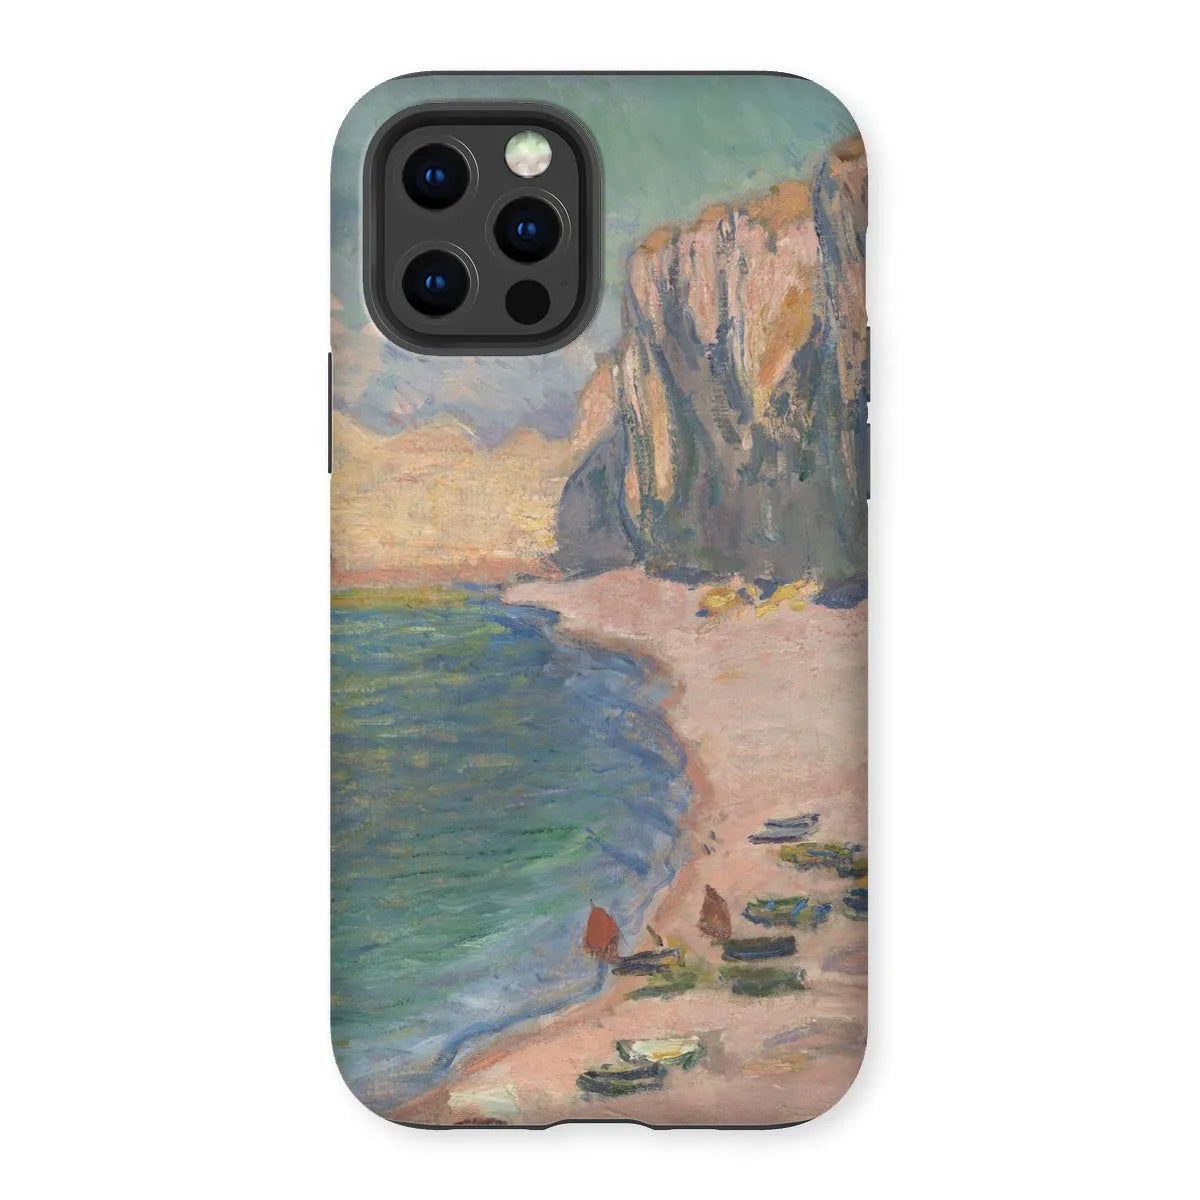 étretat - Impressionist Art Phone Case - Claude Monet - Iphone 12 Pro / Matte - Mobile Phone Cases - Aesthetic Art